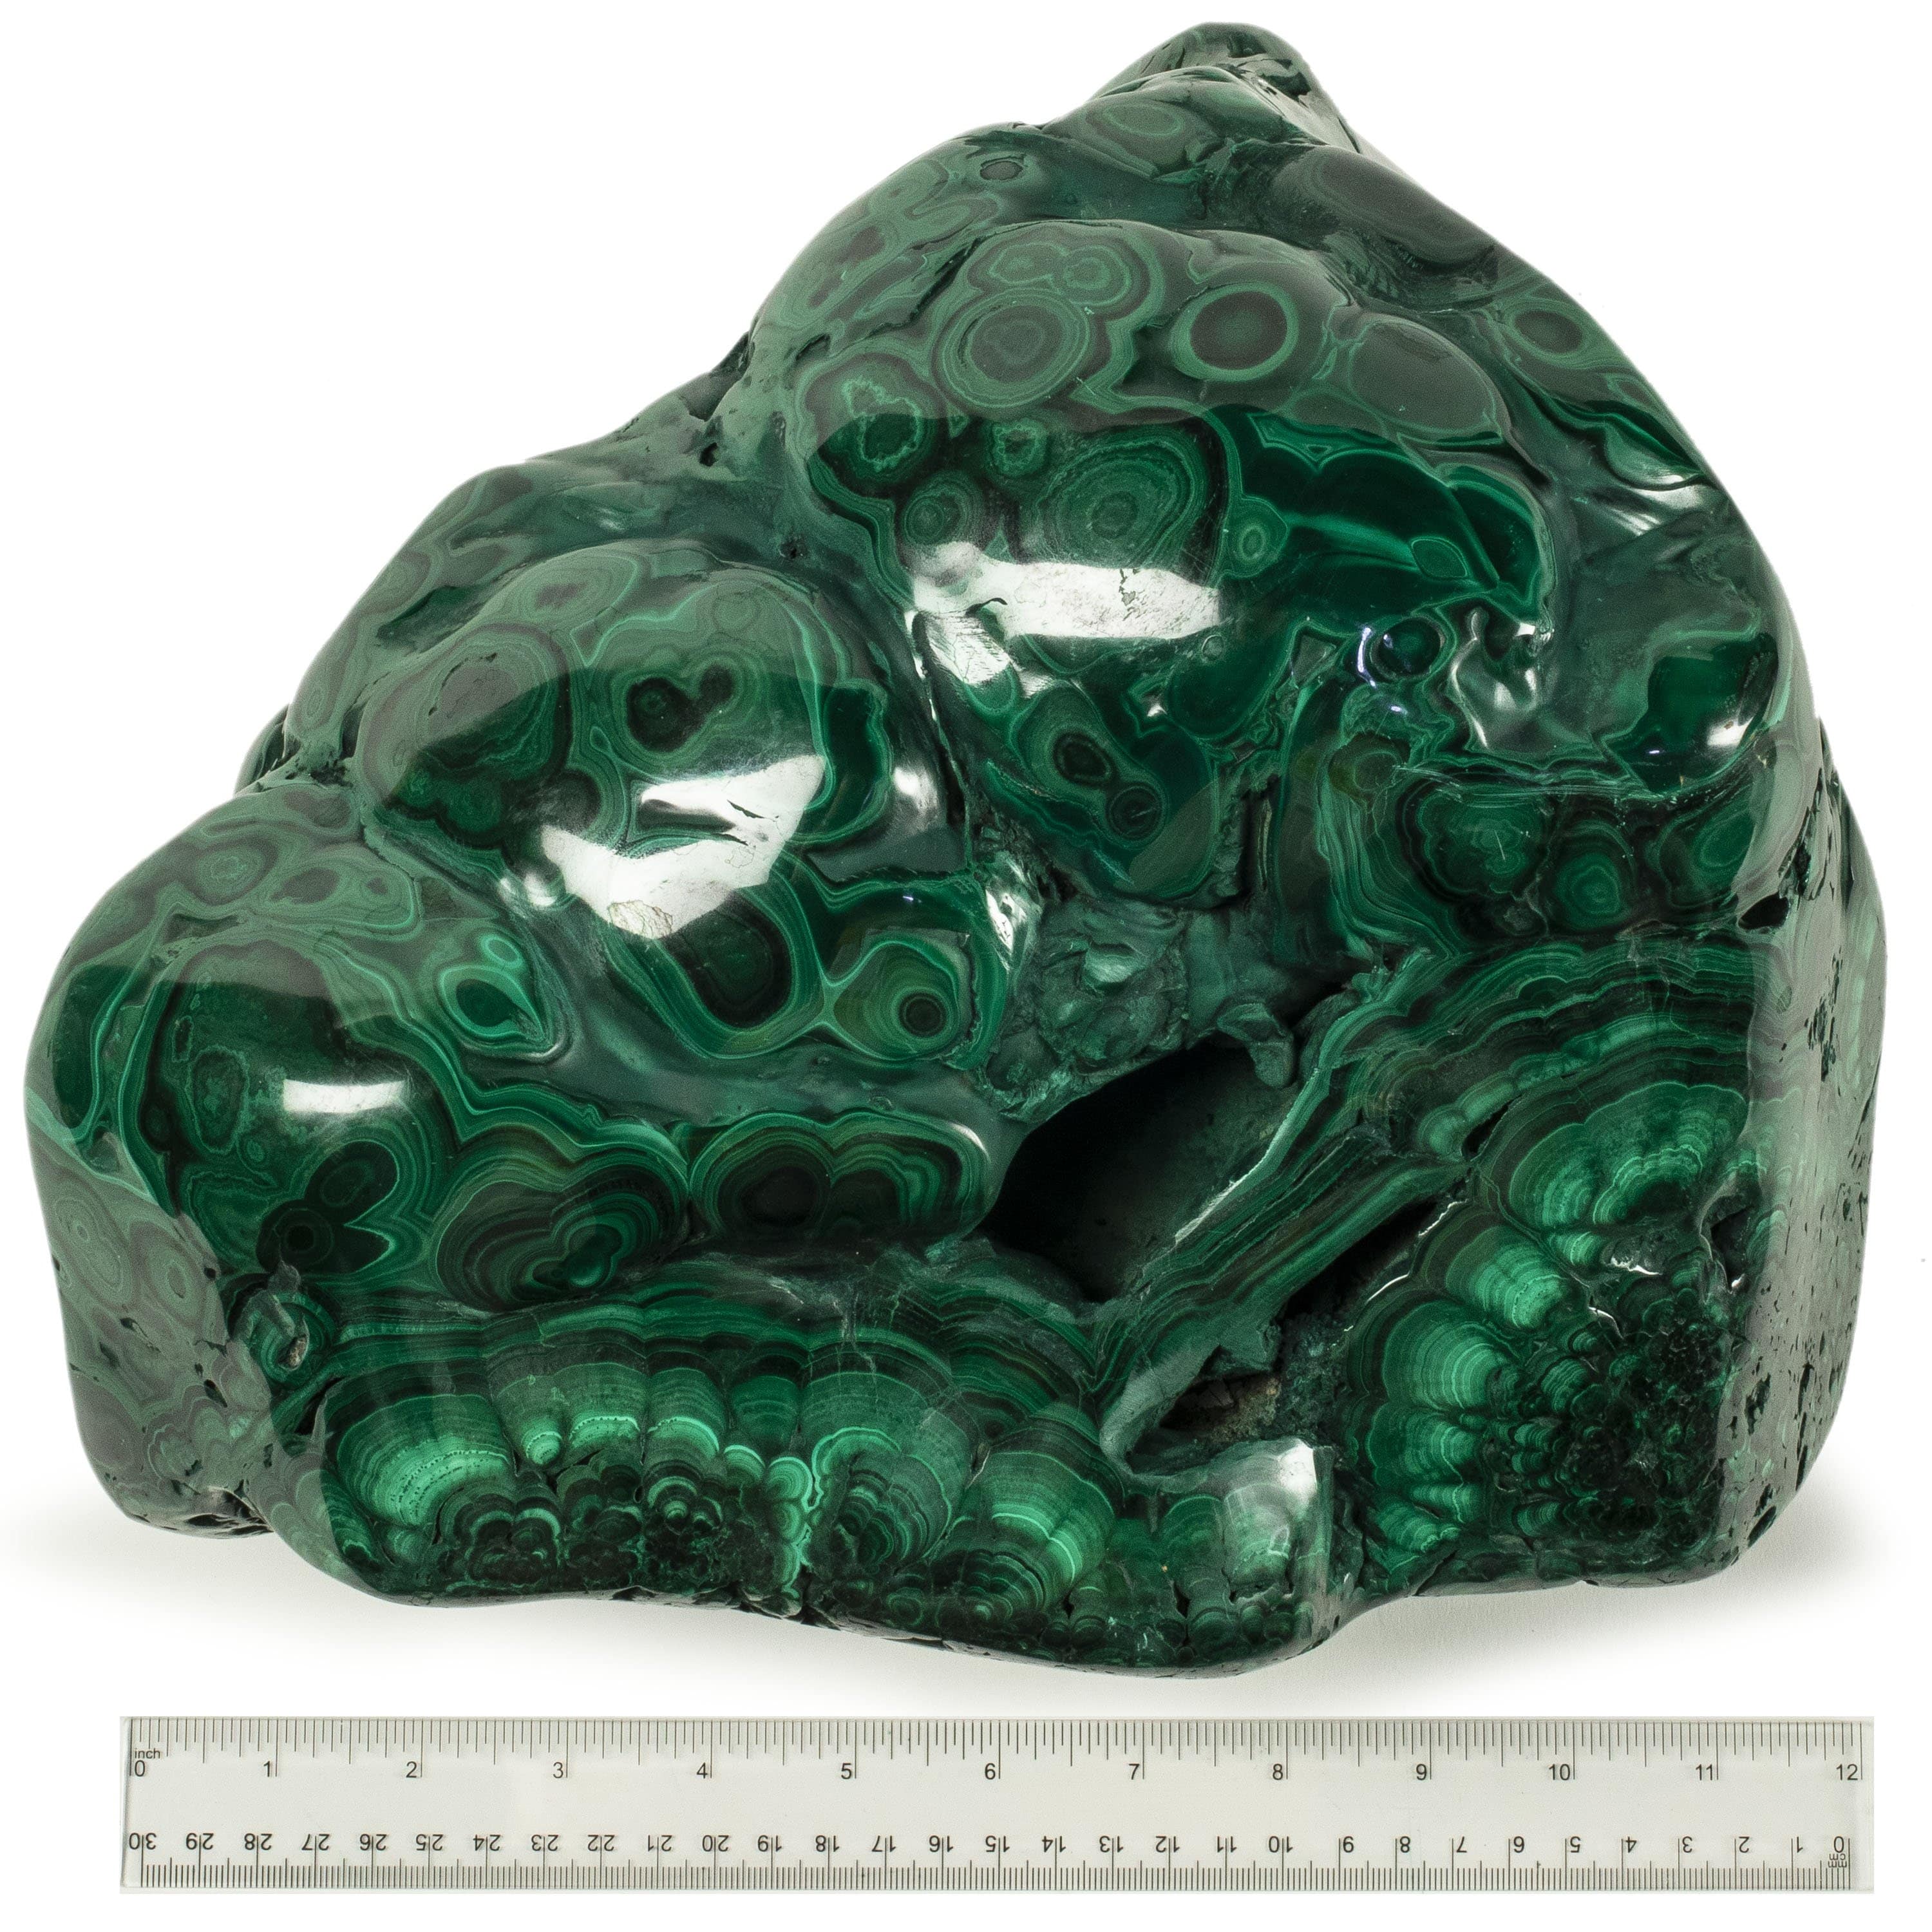 Kalifano Malachite Rare Natural Green Malachite Polished Freeform Specimen from Congo - 24.7 kg / 54.5 lbs MA15400.001